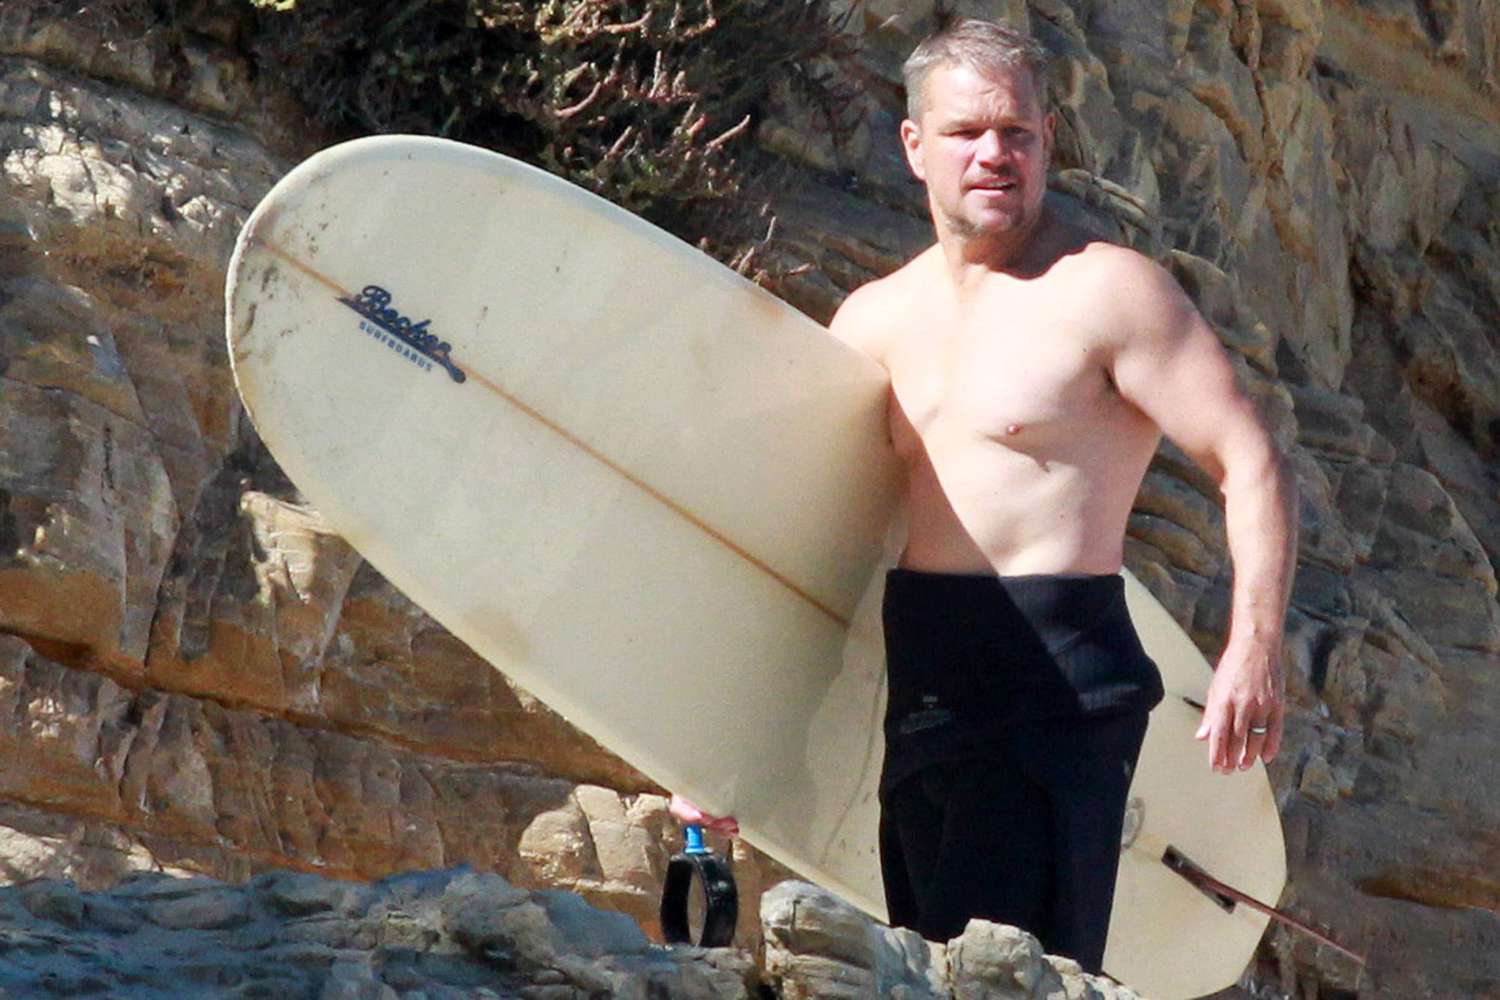 Matt Damon Surfing Shirtless Playing Football With Bikini Model Friend